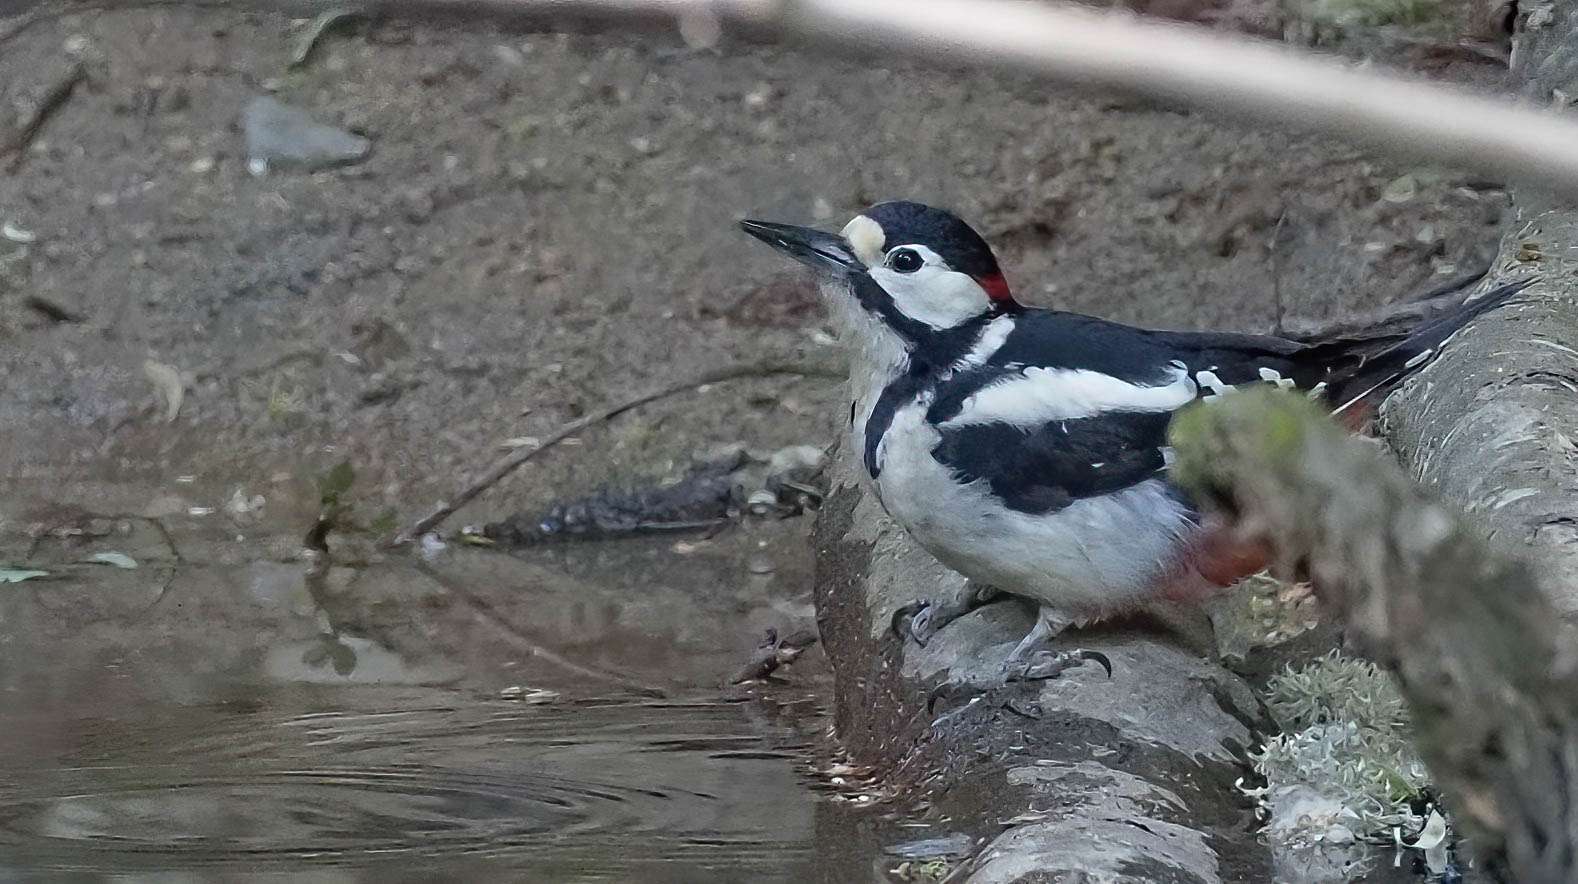 Great Spotted Woodpecker by Wayne Emery at Plym Bridge